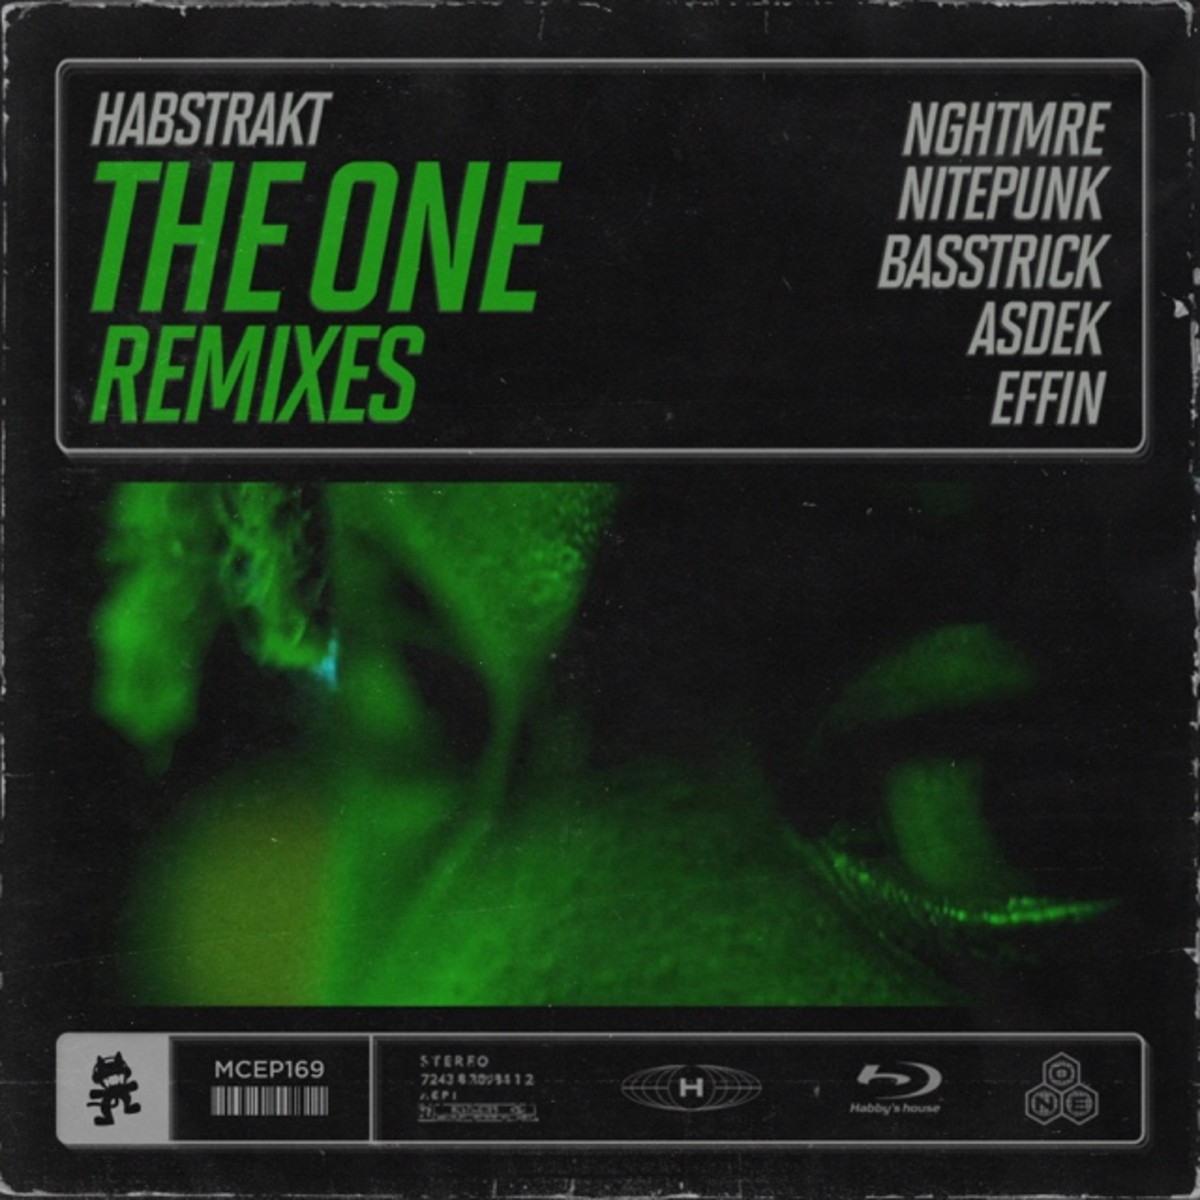 Habstrakt - The One (Remixes) : NGHTMRE, Nitepunk, Basstrick, Asdek, Effin